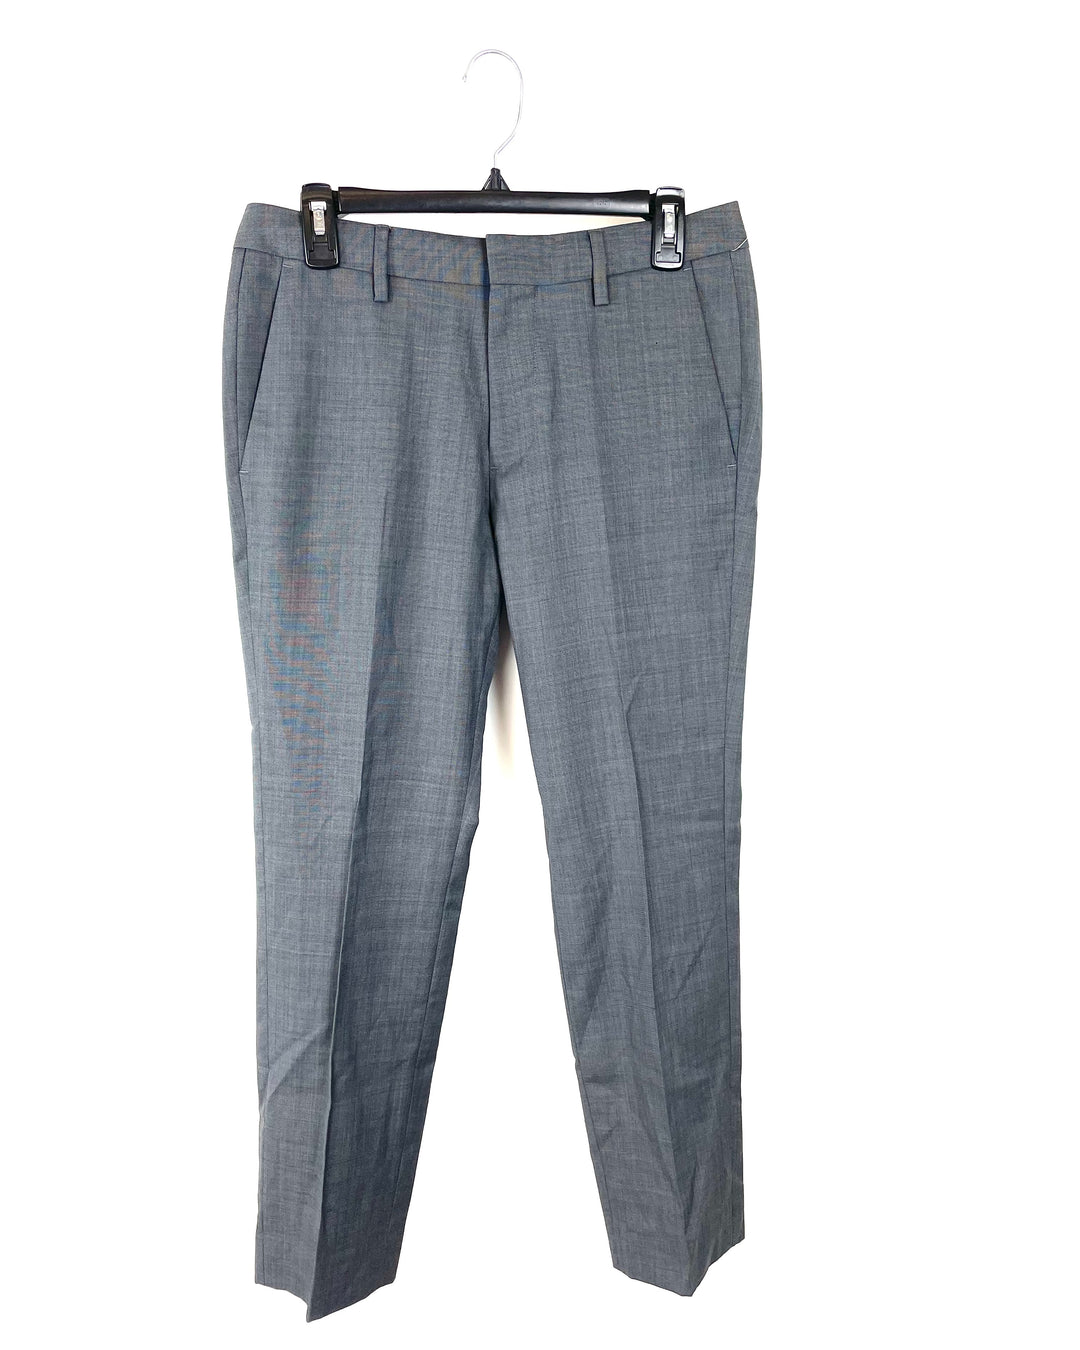 MENS Tailored Fit Dark Heather Grey Dress Pants - 30/28